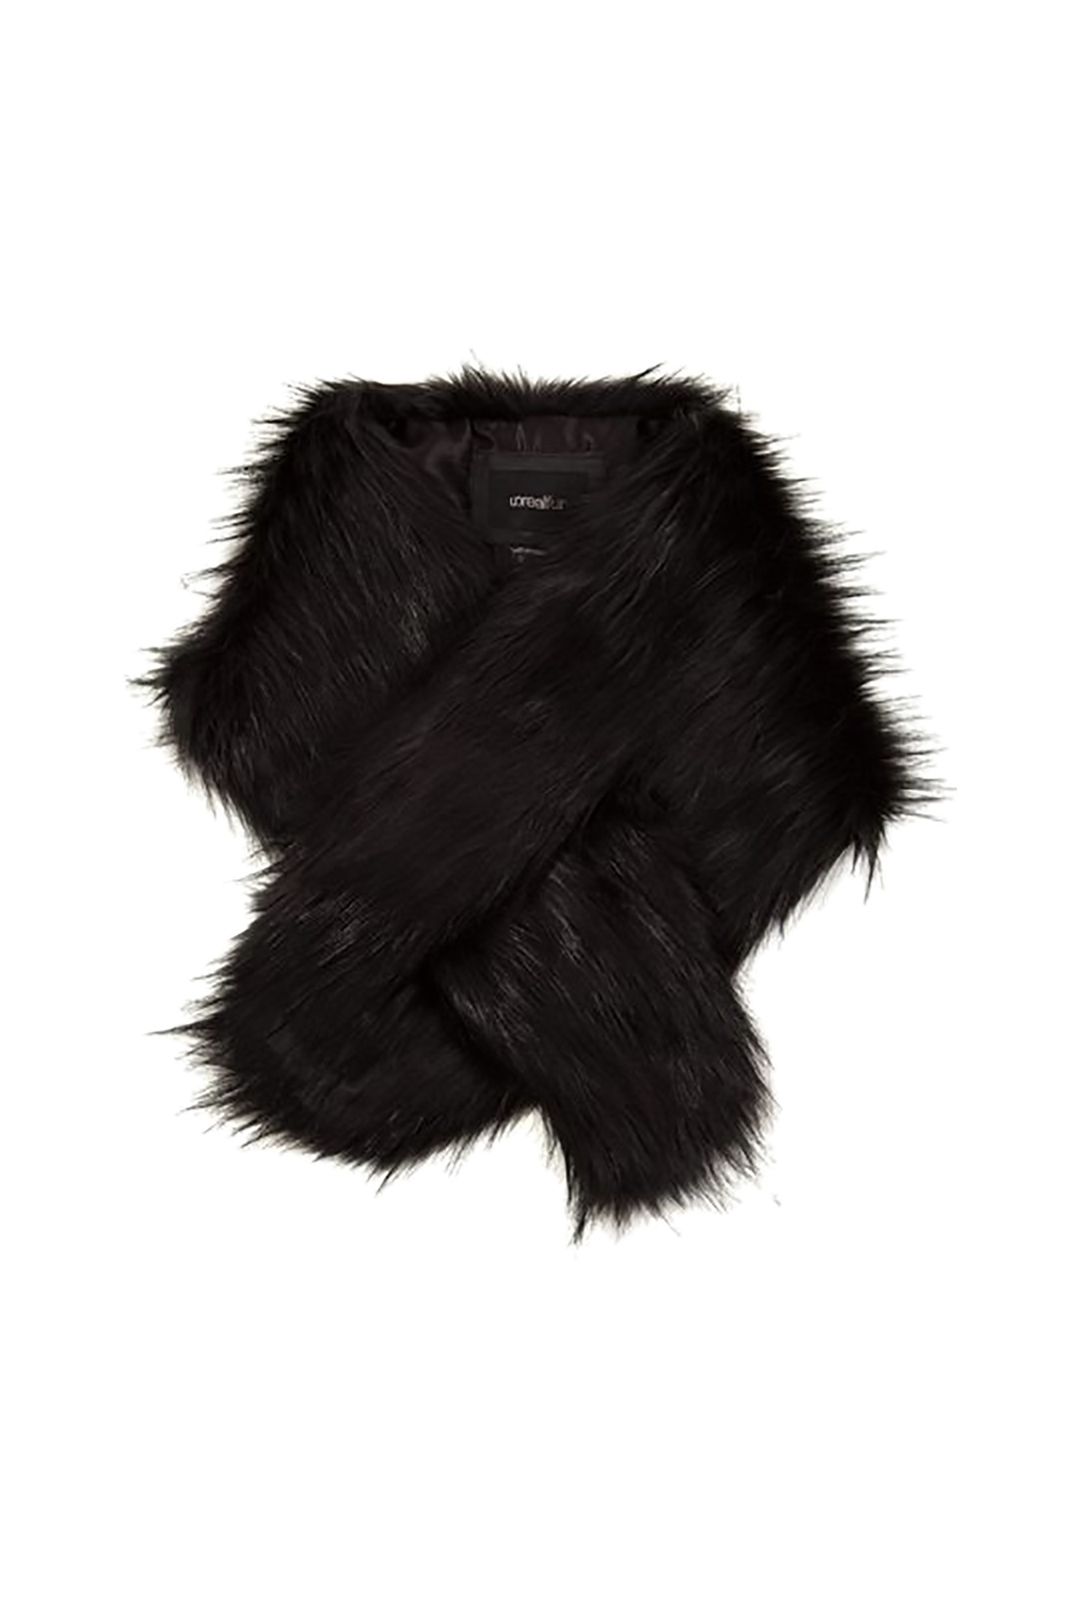 Unreal Fur - Furocious Thread - Black - Front